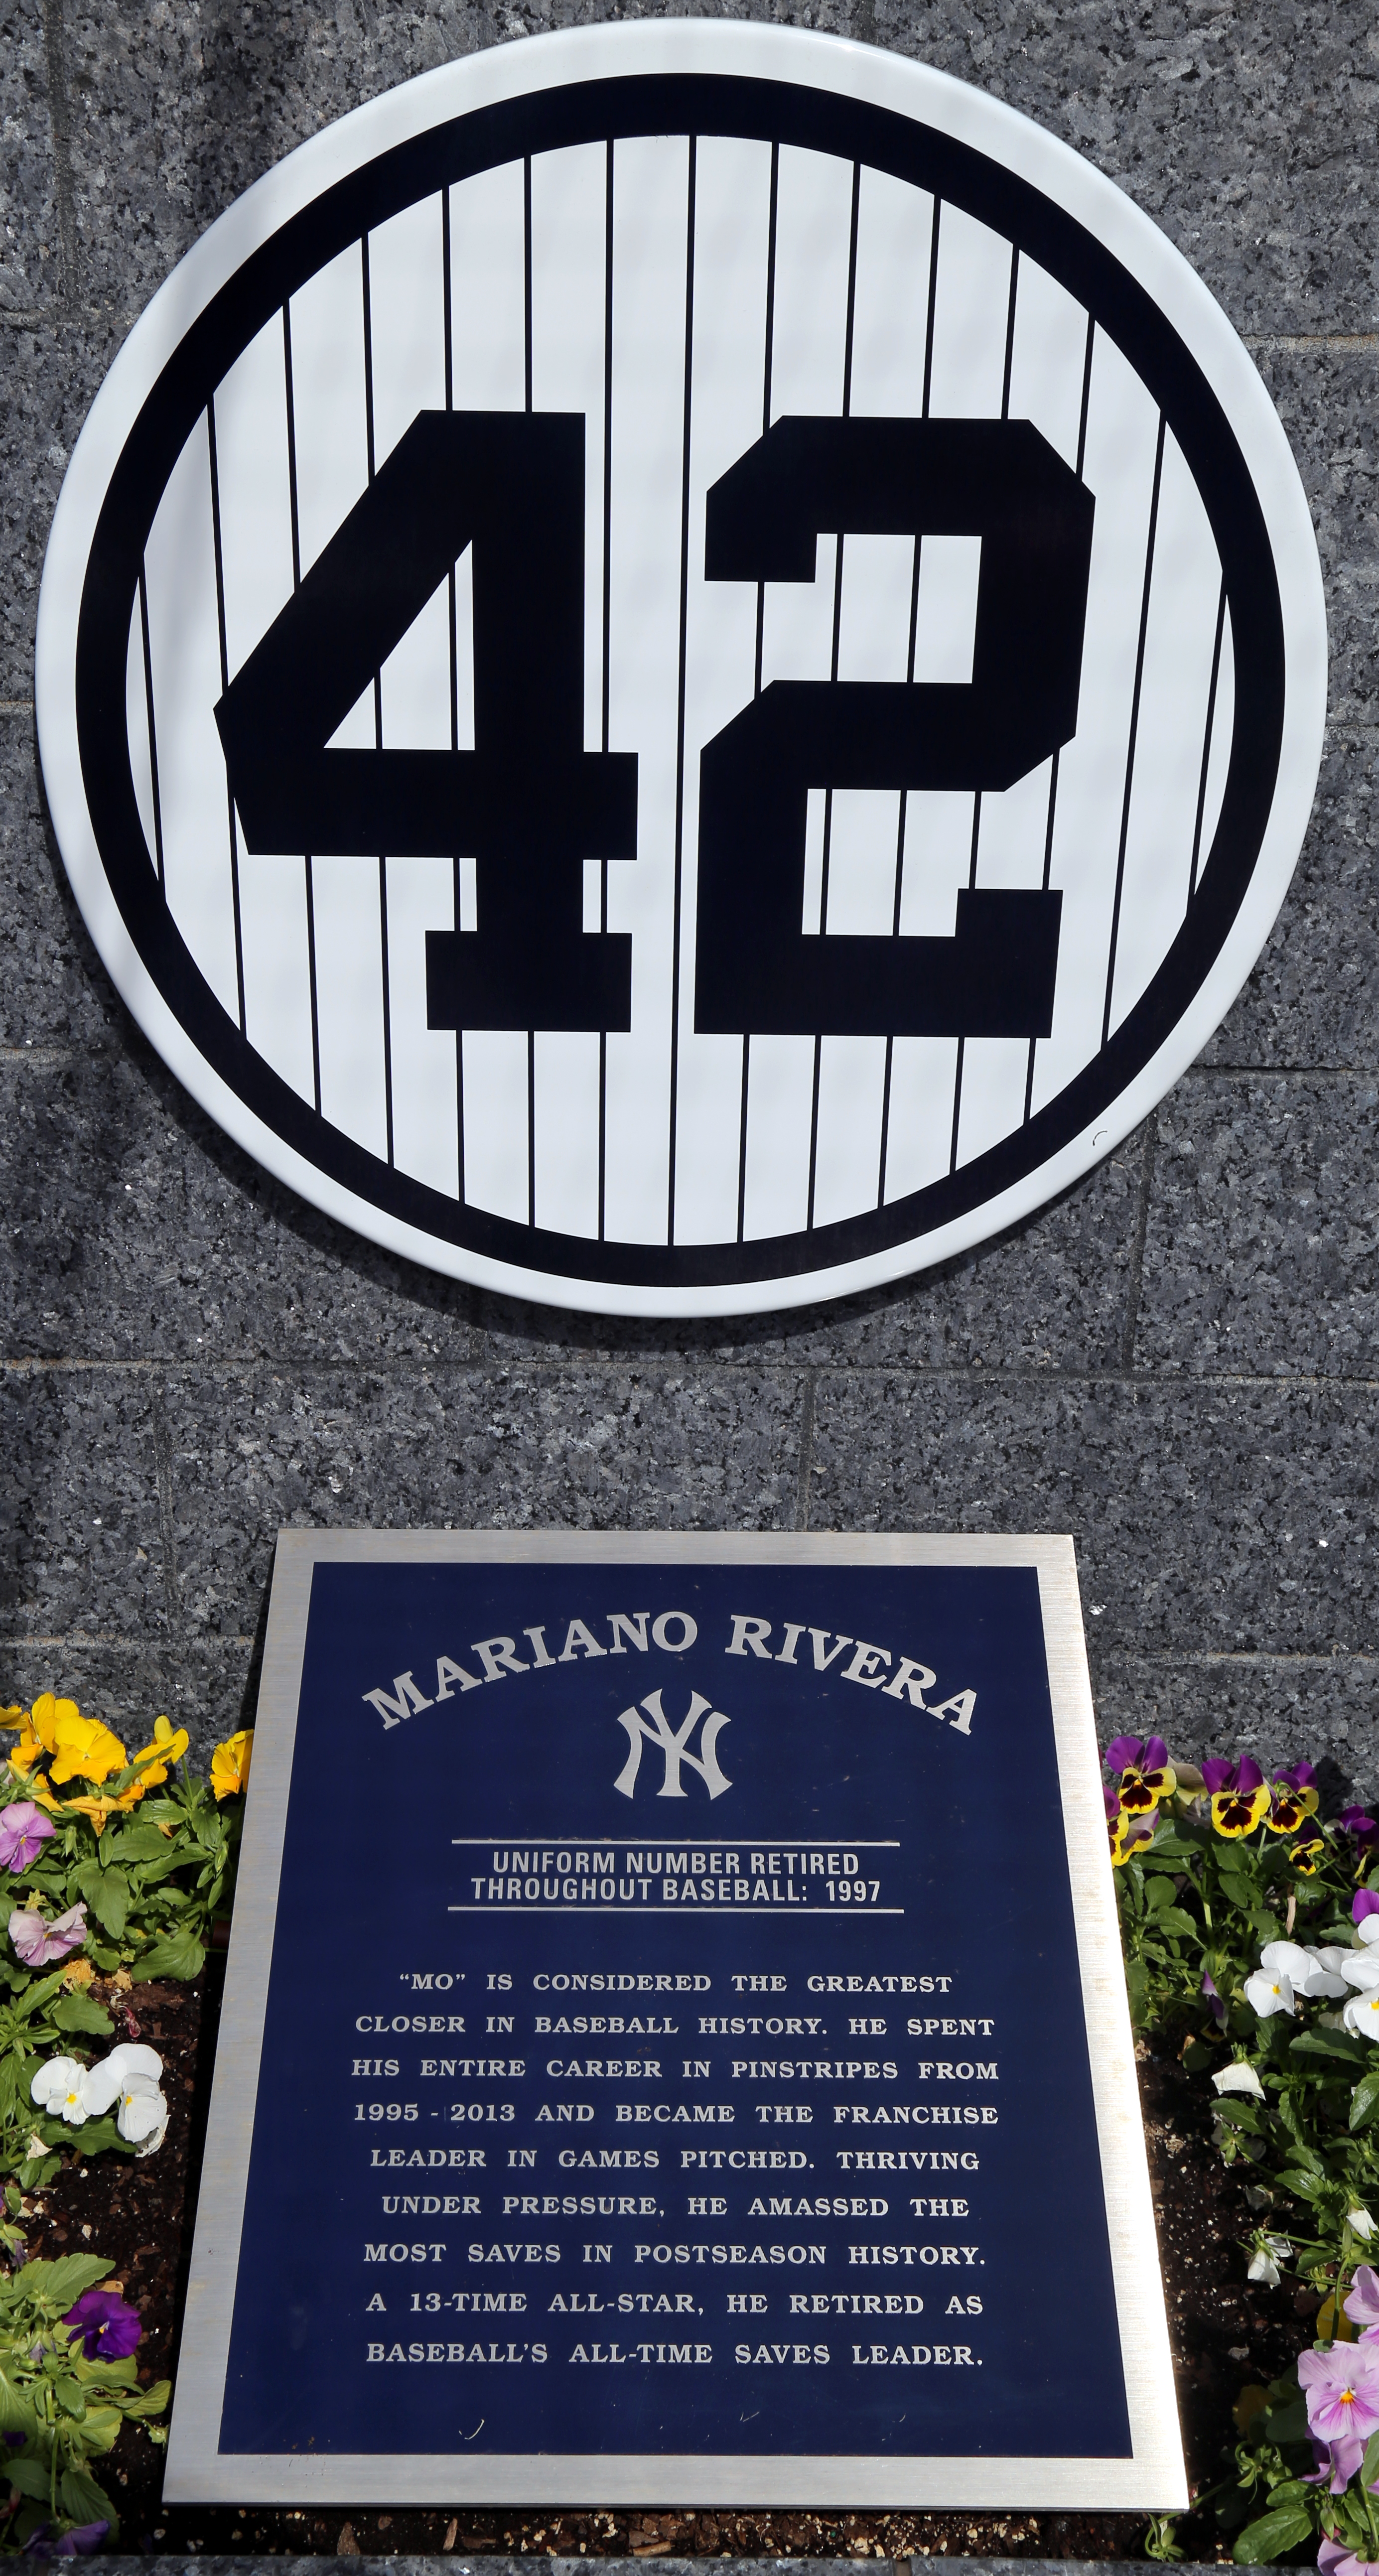 Yankees retire Mariano Rivera's number 